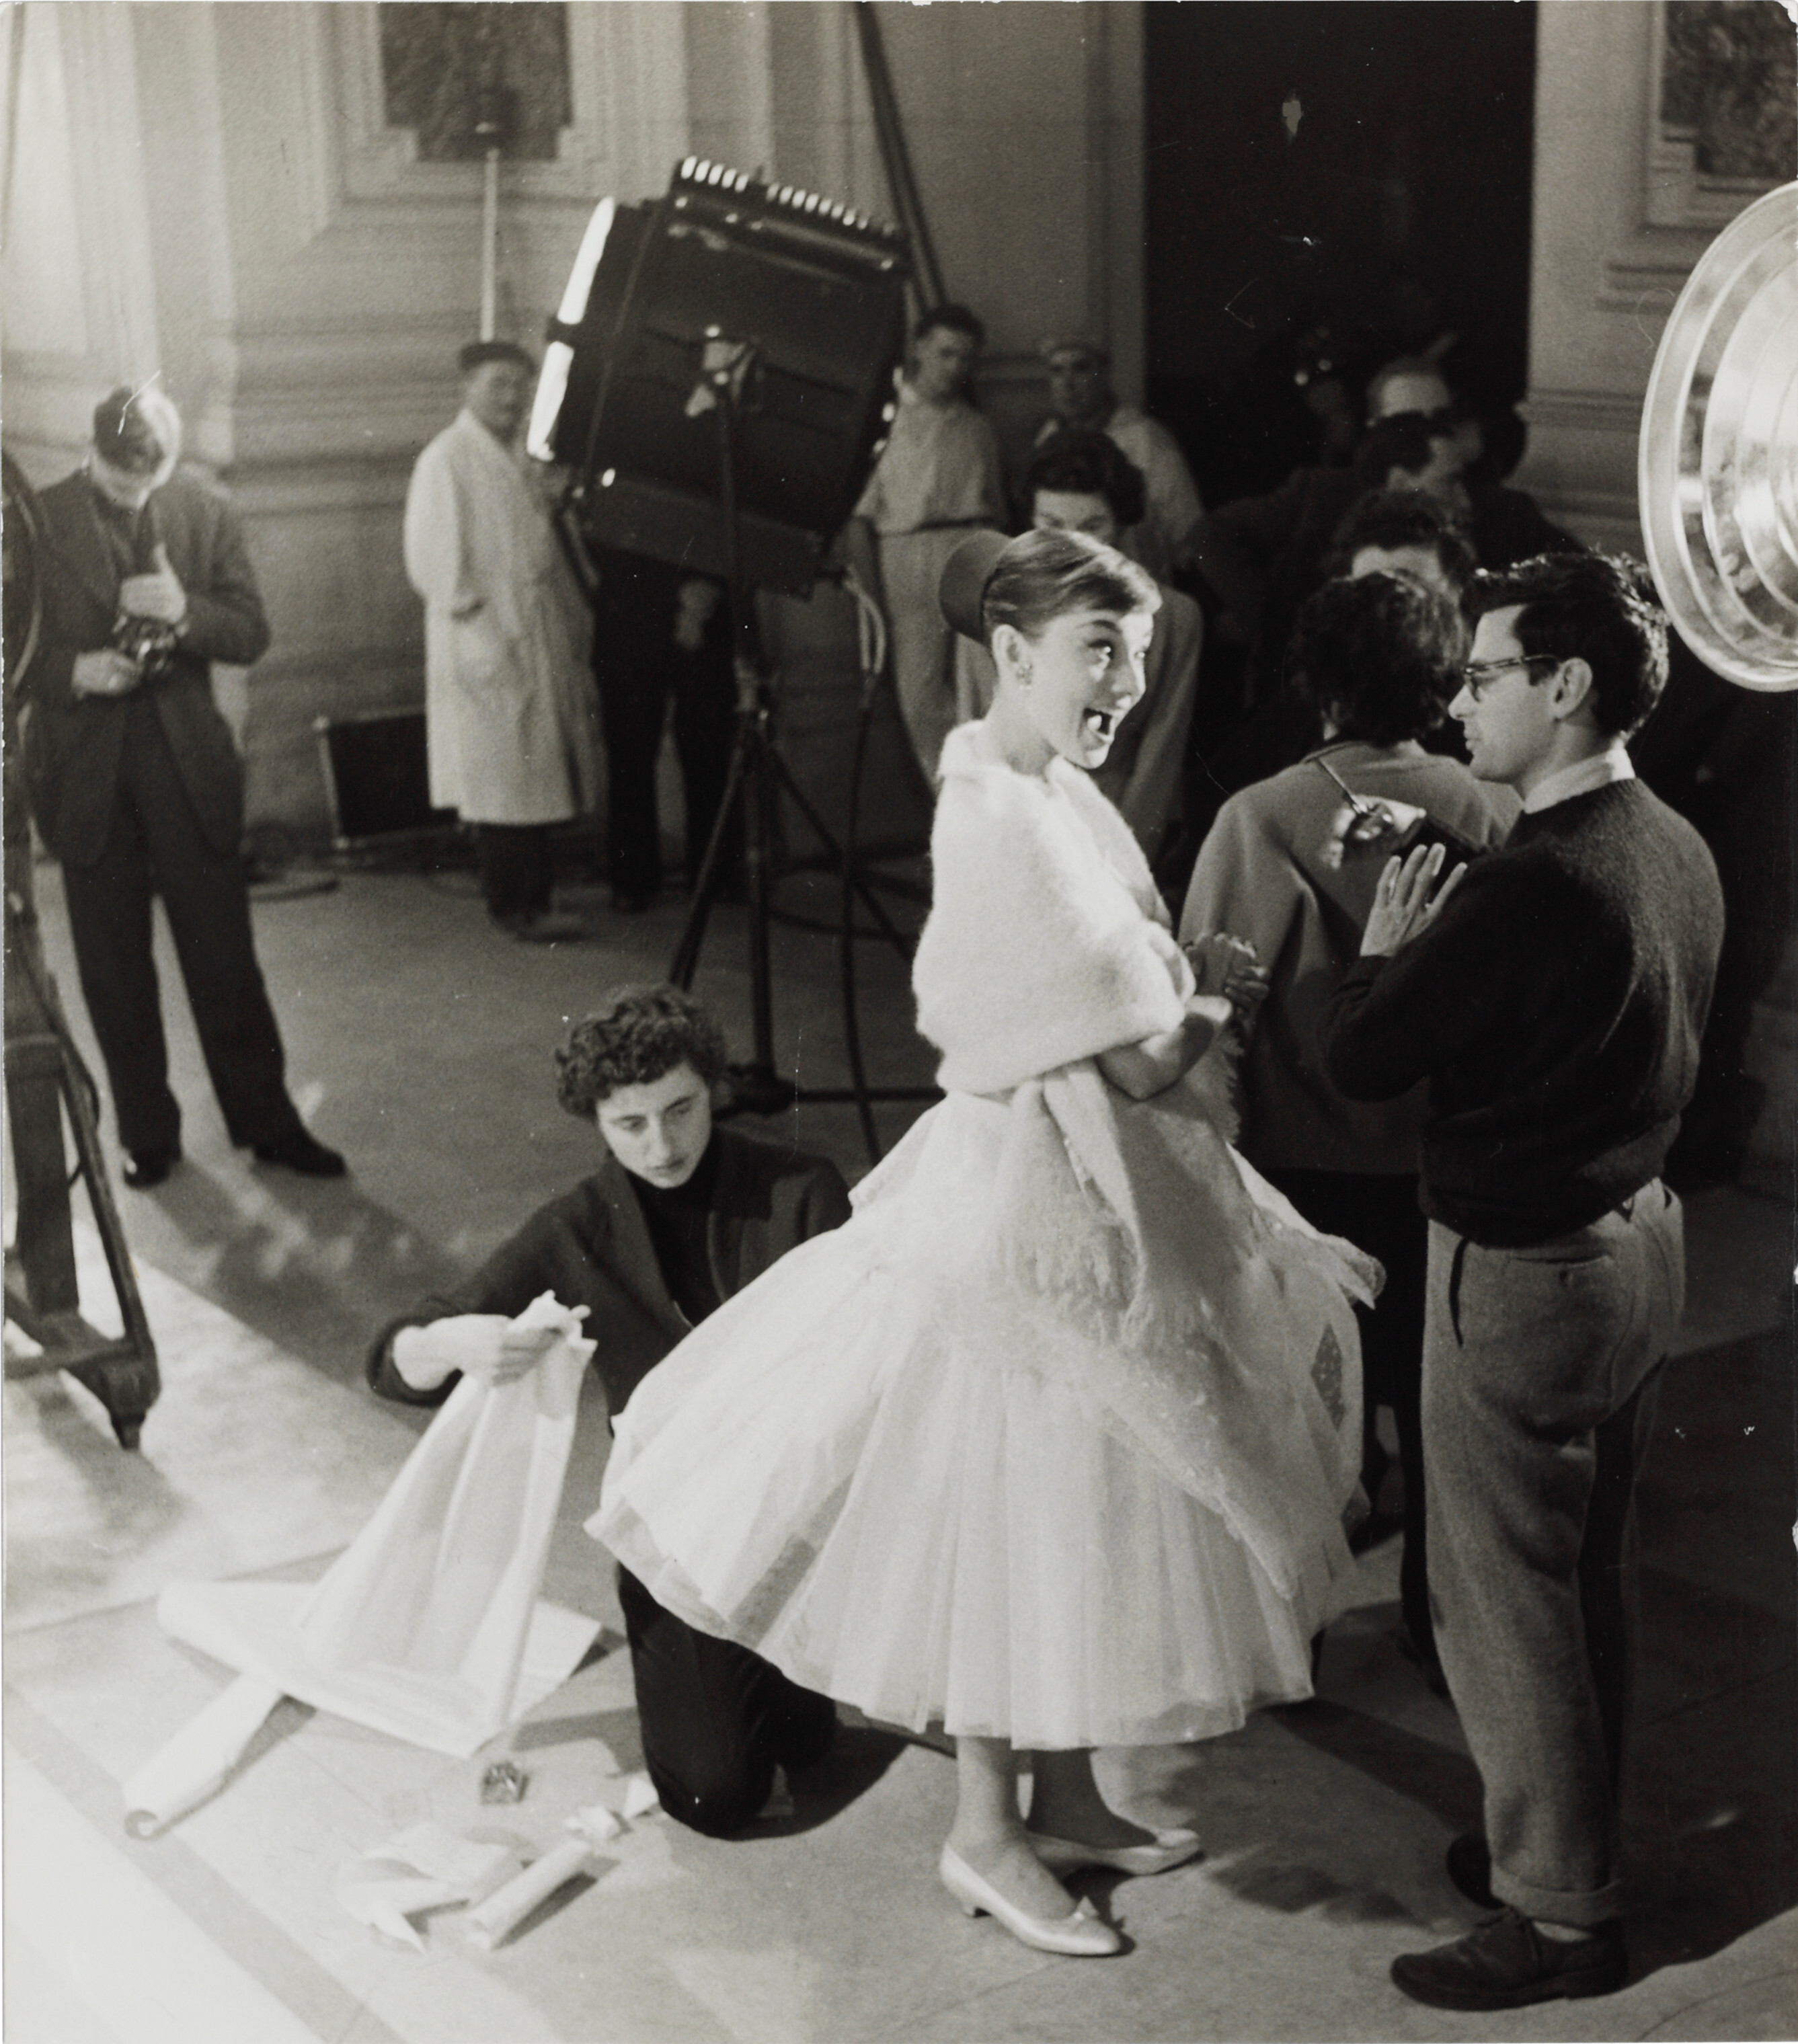 Одри Хепберн и Ричард Аведон во время съемок постановки Paramount 1957 года Забавная мордашка, Париж, 1956 год.  Фотограф Ричард Аведон